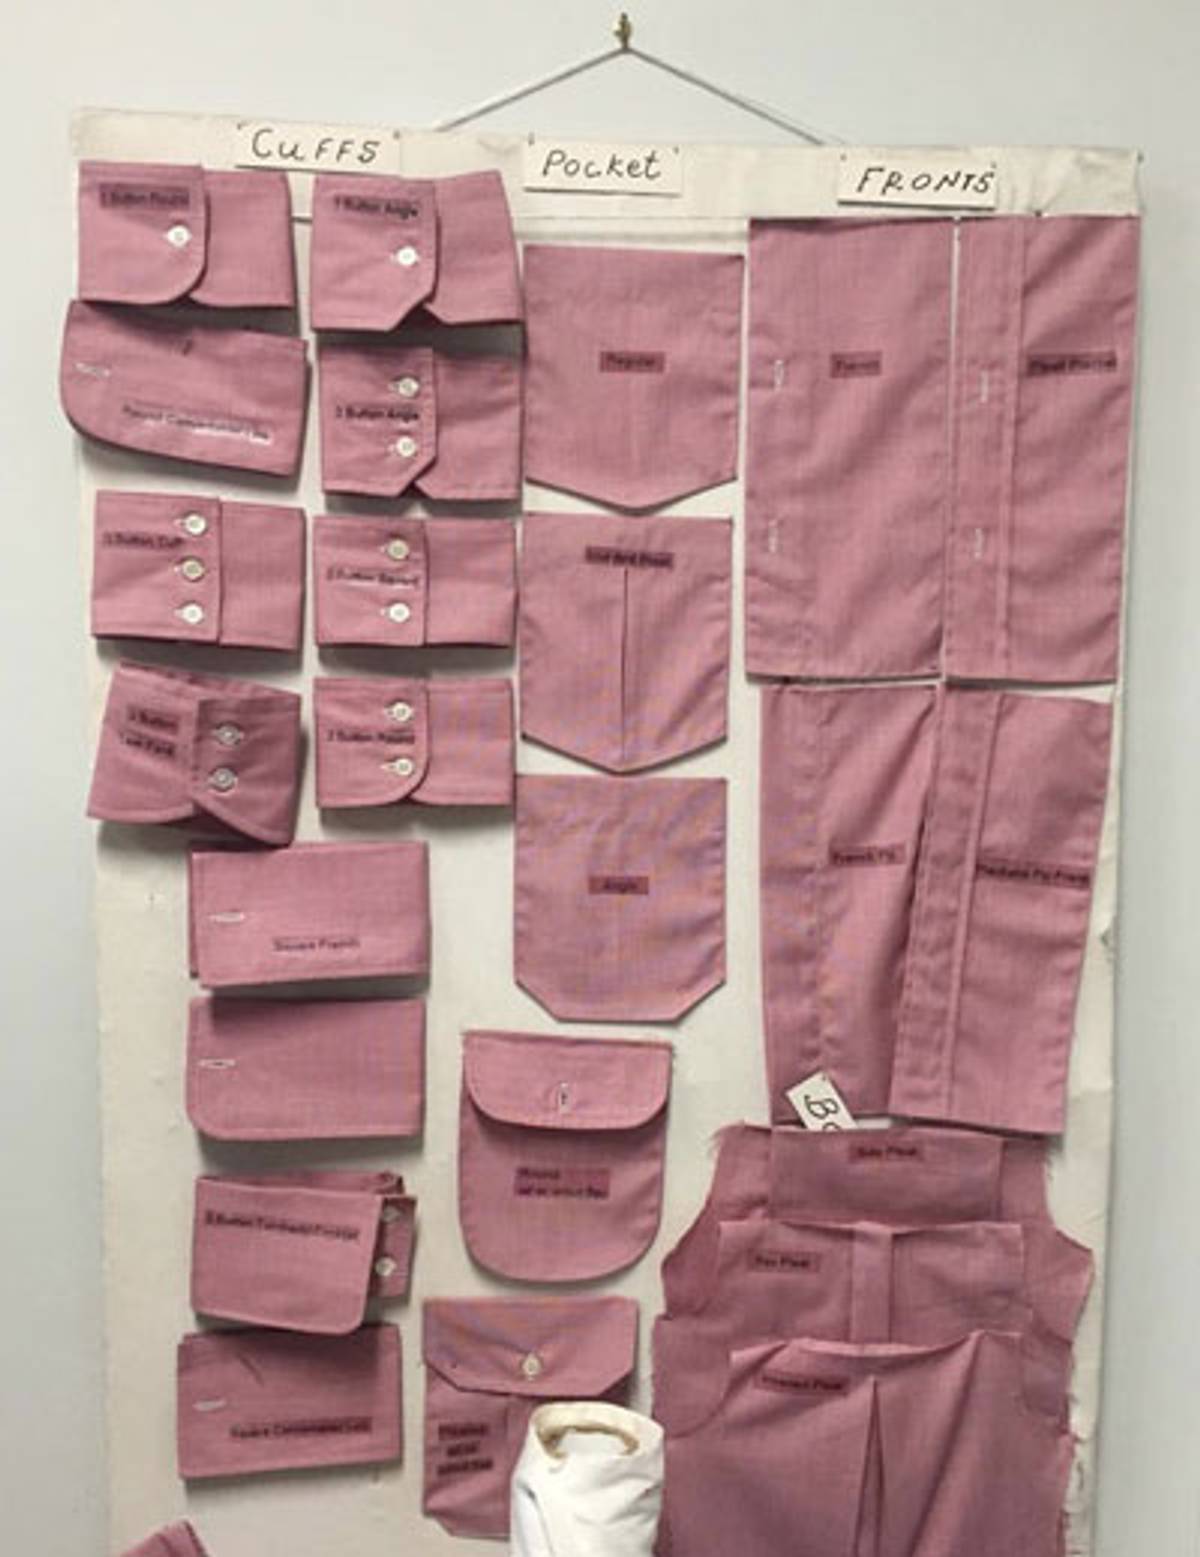 Shirt options in Carl’s workroom. (Photo: Marjorie Ingall)